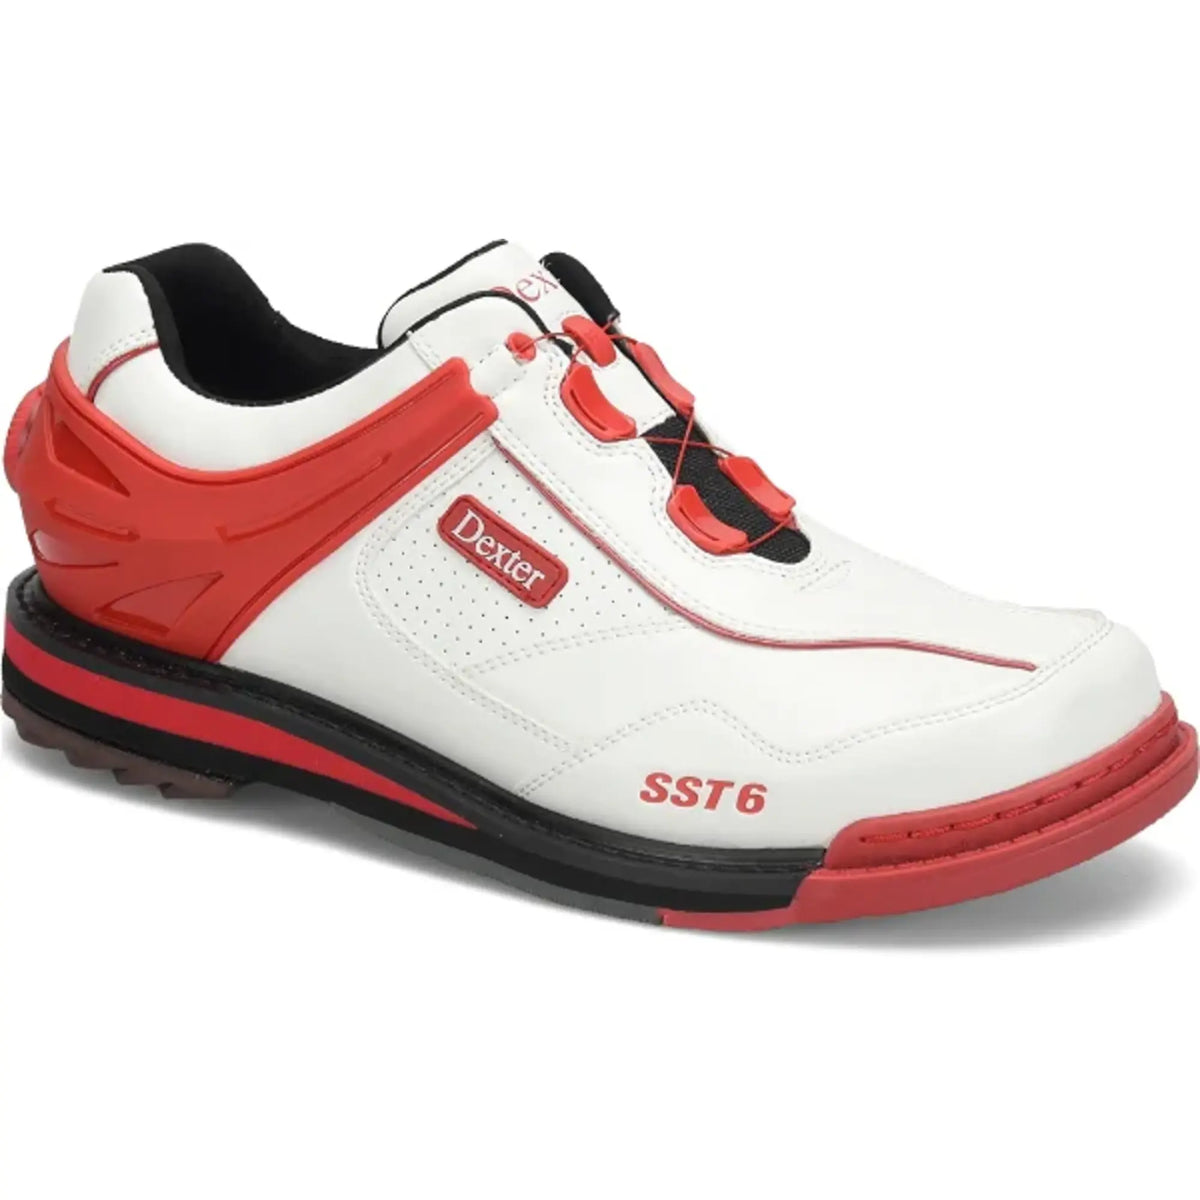 SST 6 Hybrid Boa White / Red Shoes